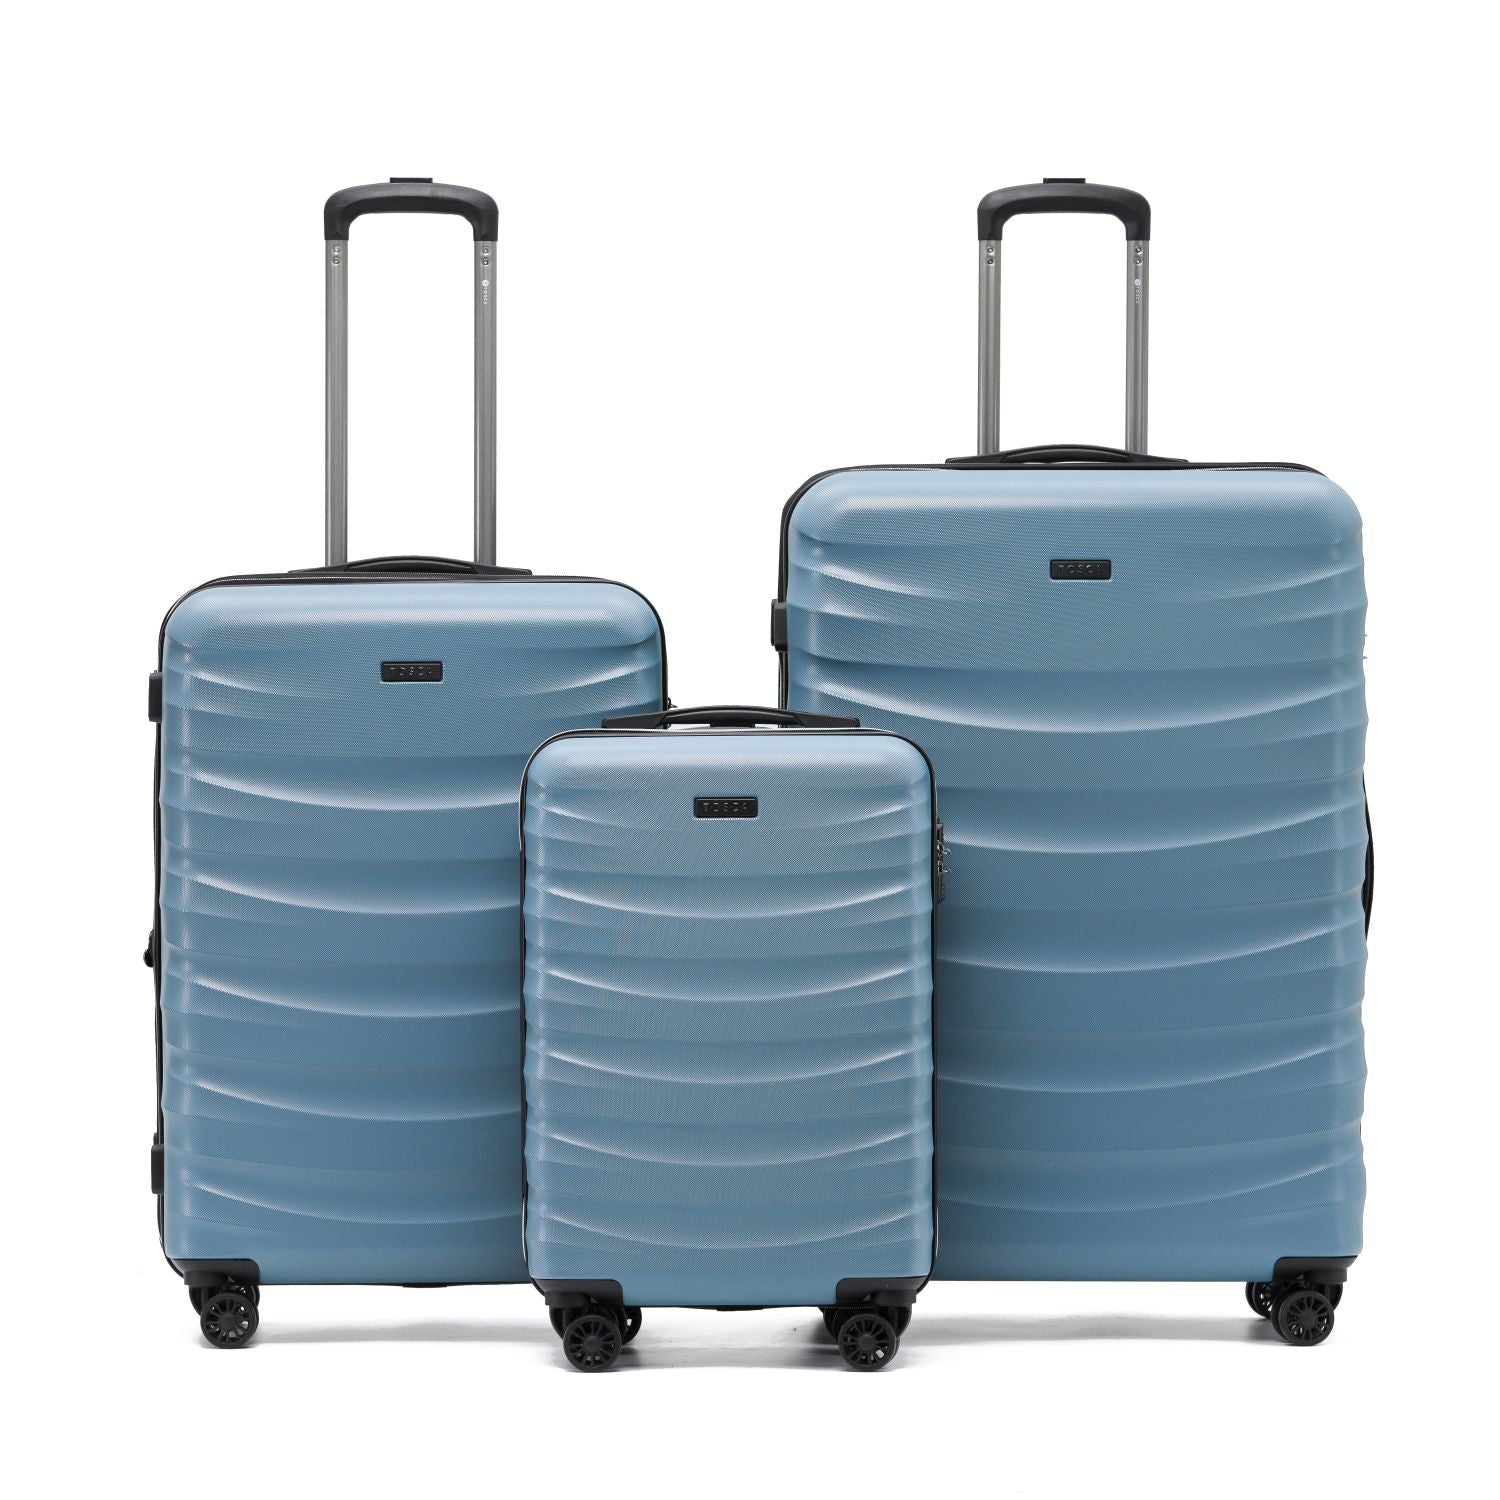 Tosca - Intersteller set of 3 suitcases - Blue-2